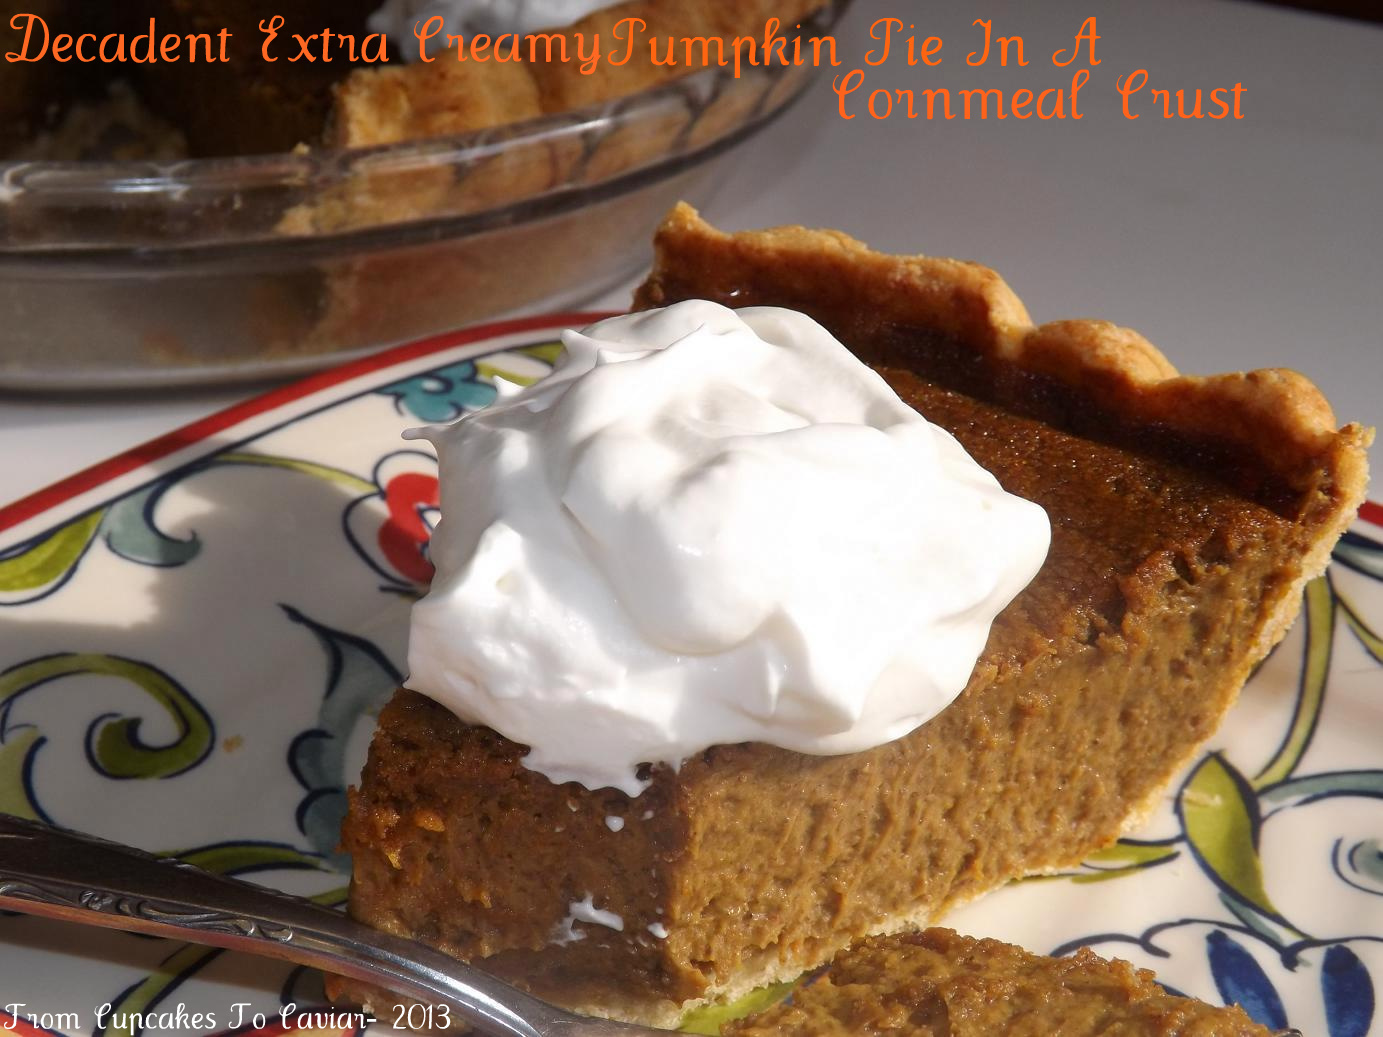 Decadent Extra Creamy Pumpkin Pie In A Cornmeal Crust